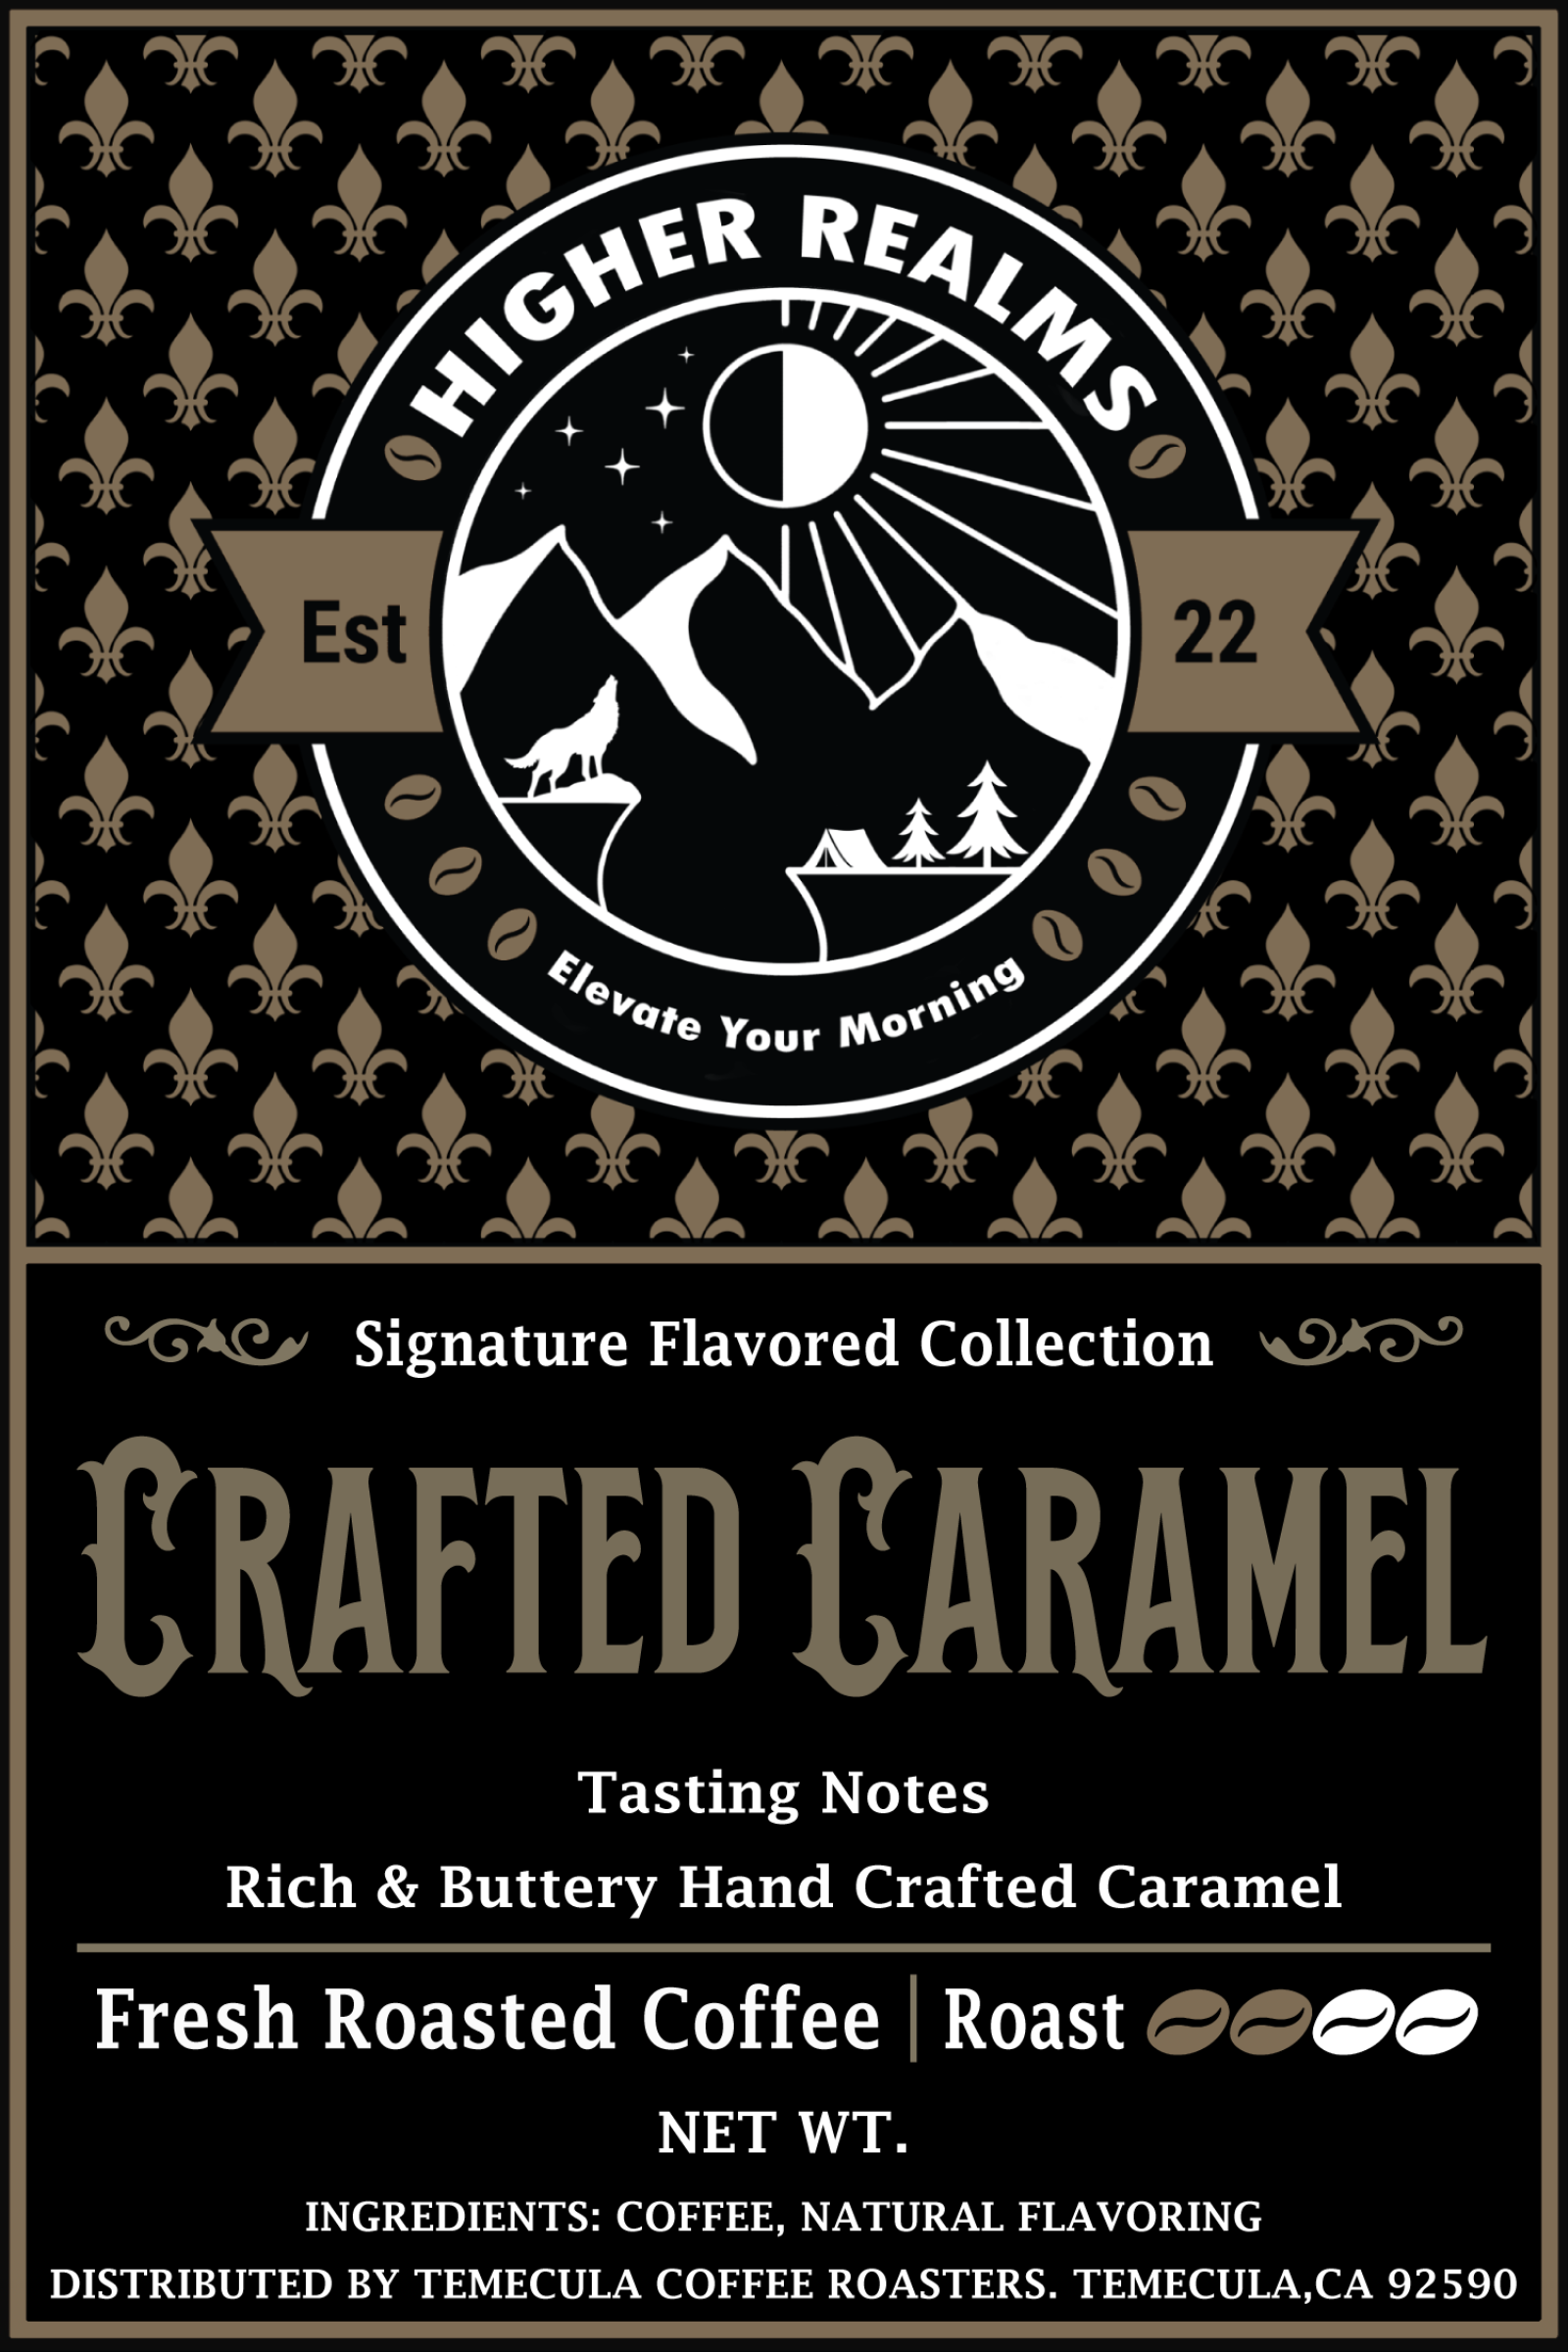 Crafted Caramel.